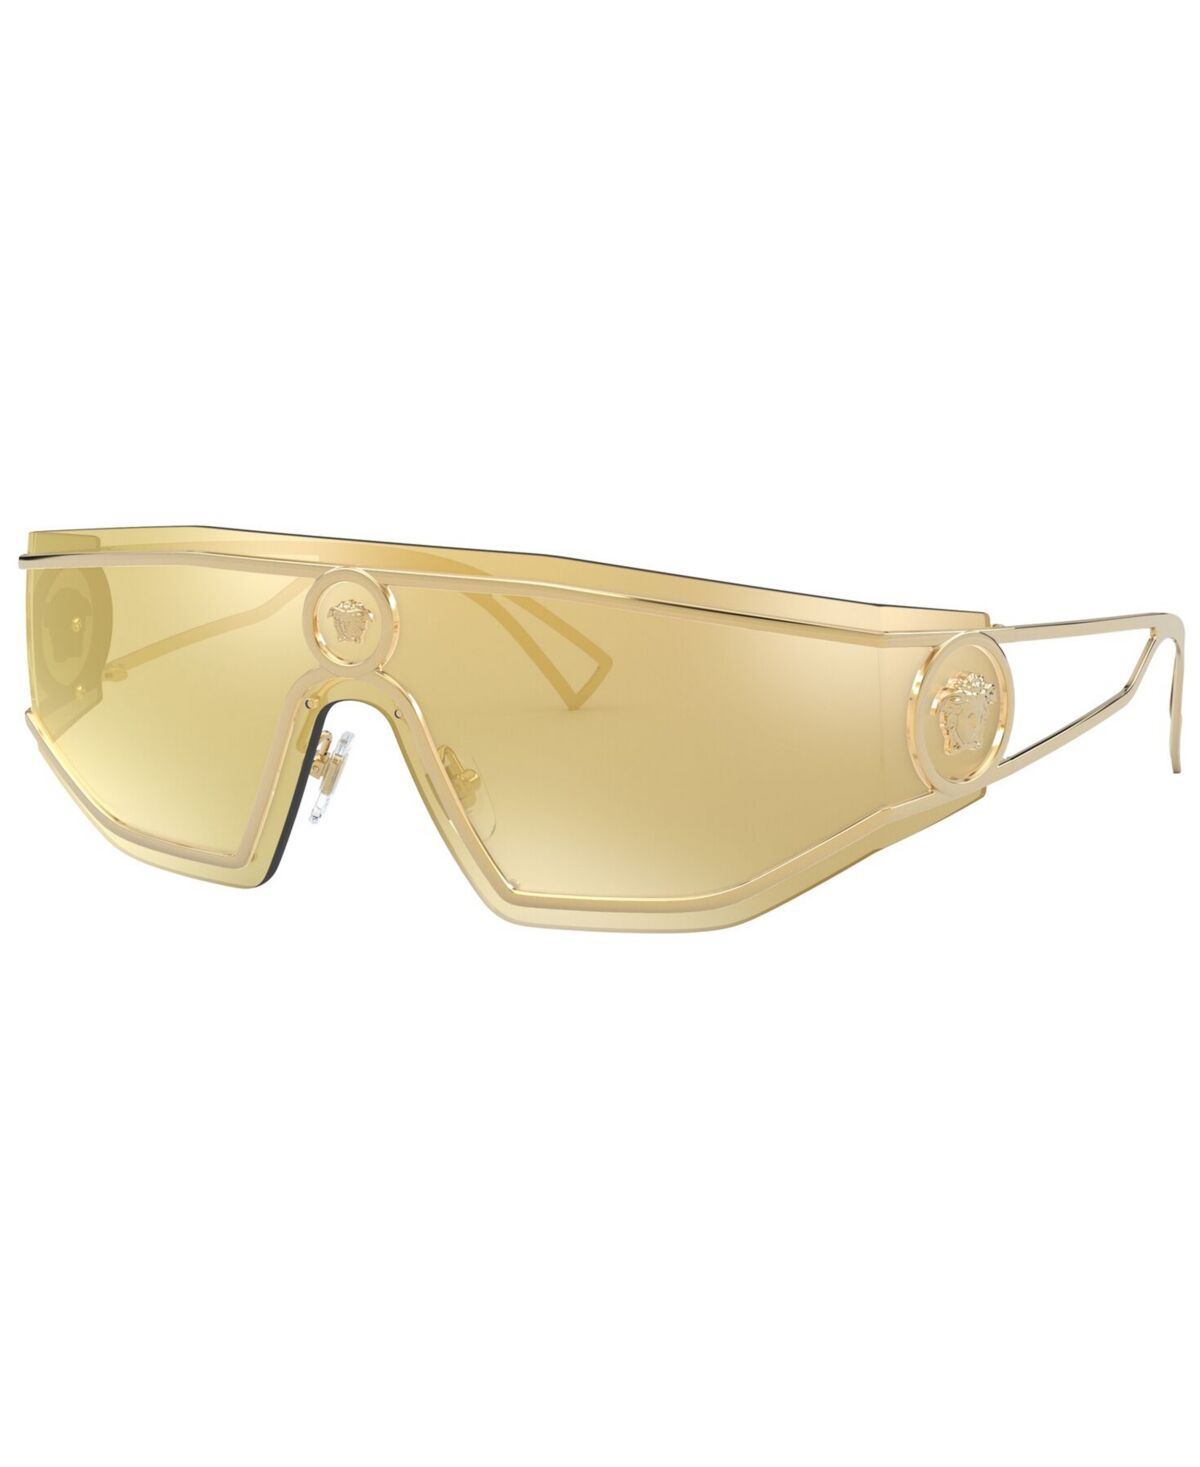 Versace Men's Sunglasses, VE2226 45 - GOLD/BROWN MIRROR GOLD